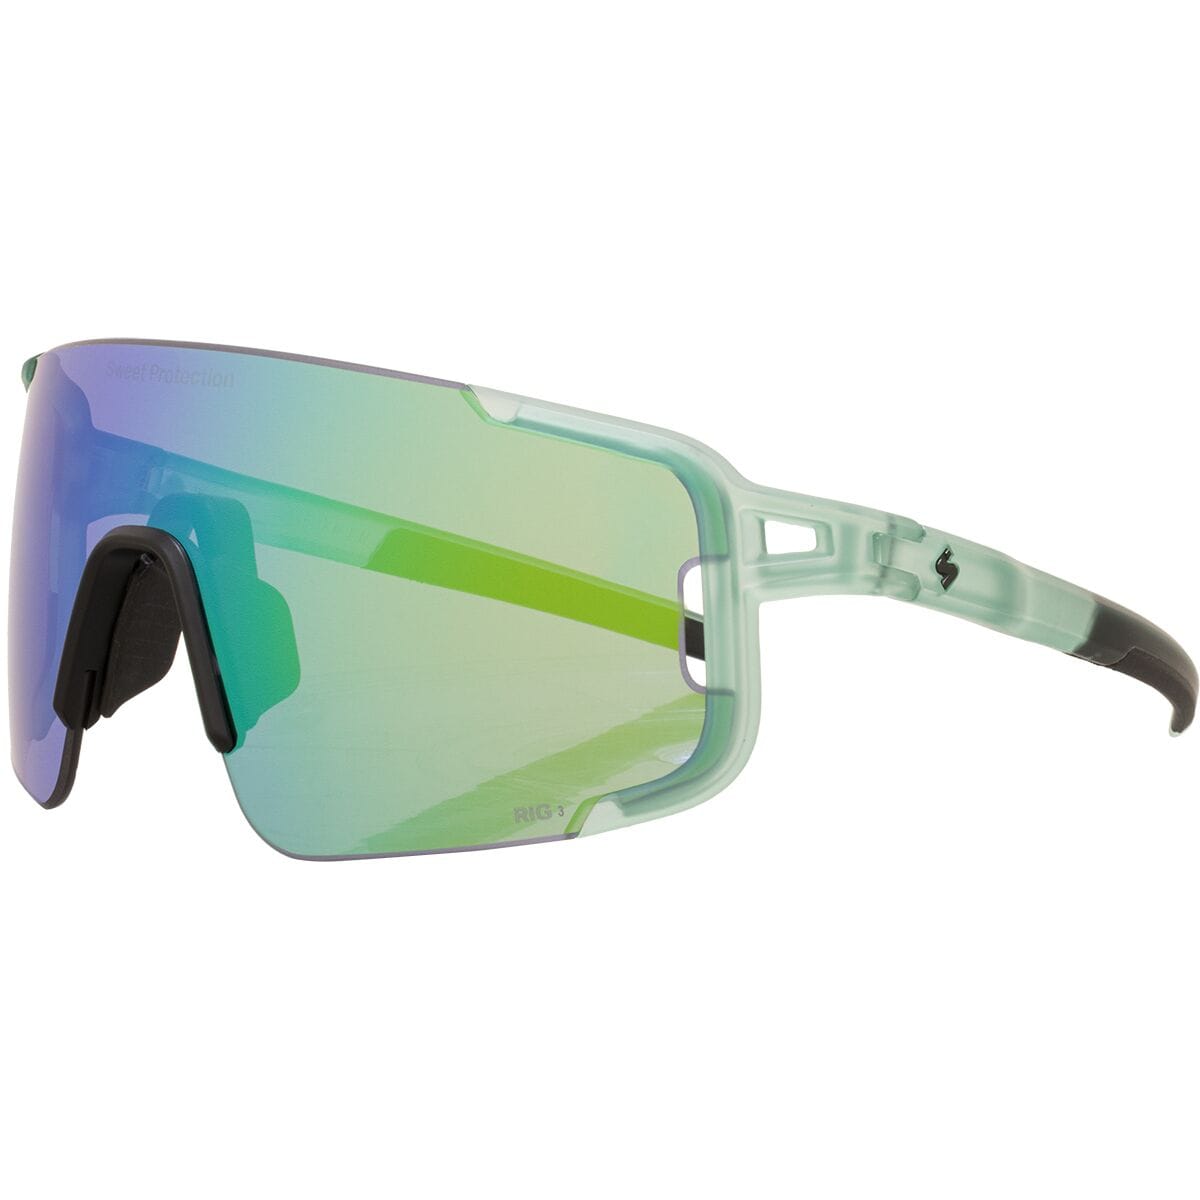 Солнцезащитные очки ronin rig reflect Sweet Protection, цвет rig emerald/crystal misty turquoise